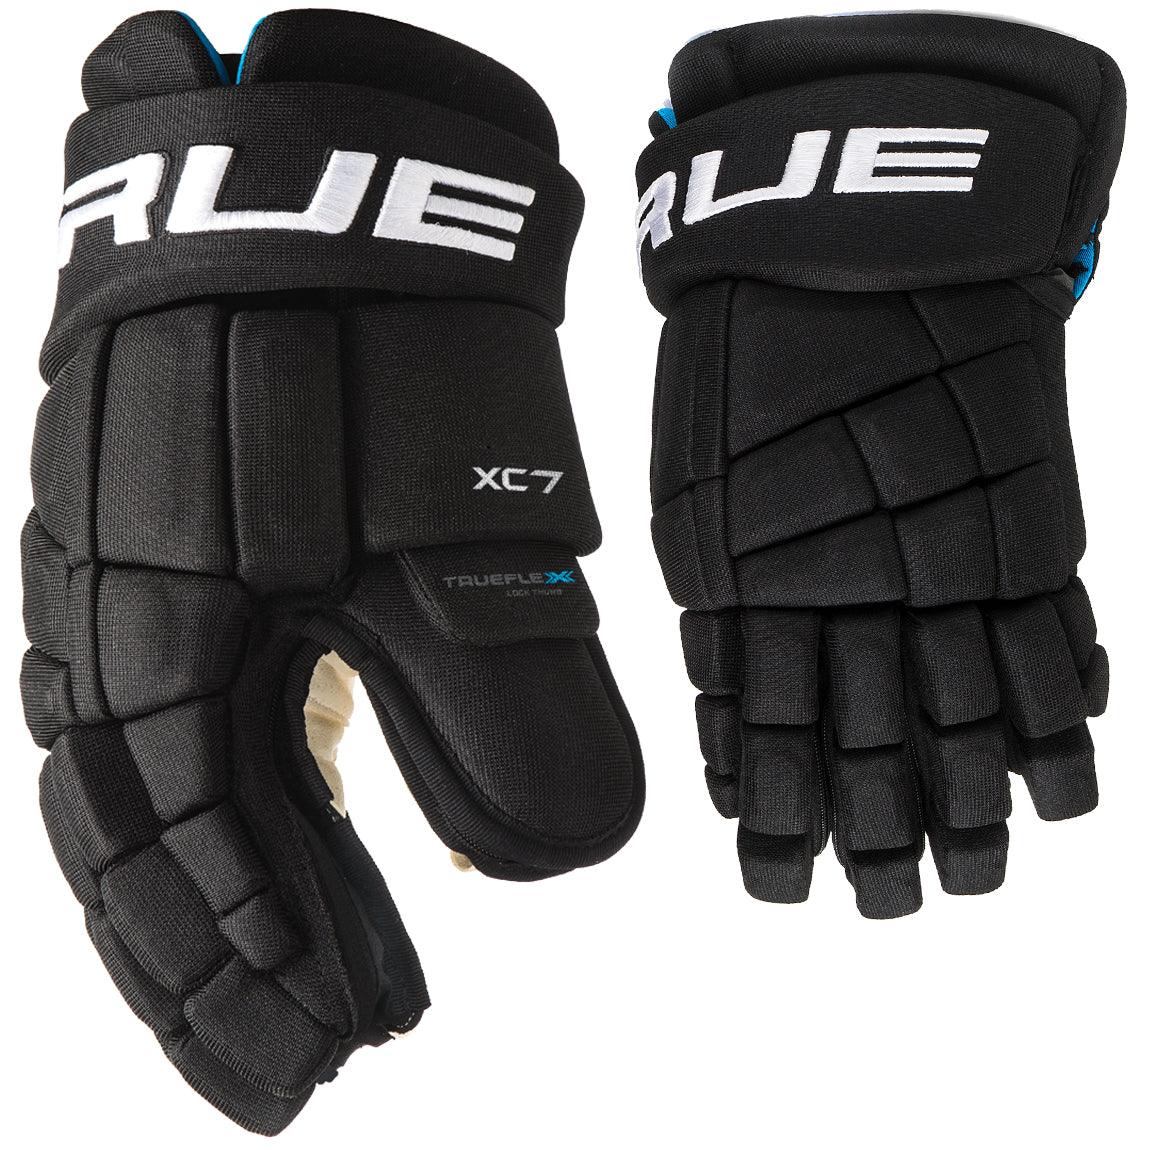 XC7 Hockey Gloves - Senior - Sports Excellence